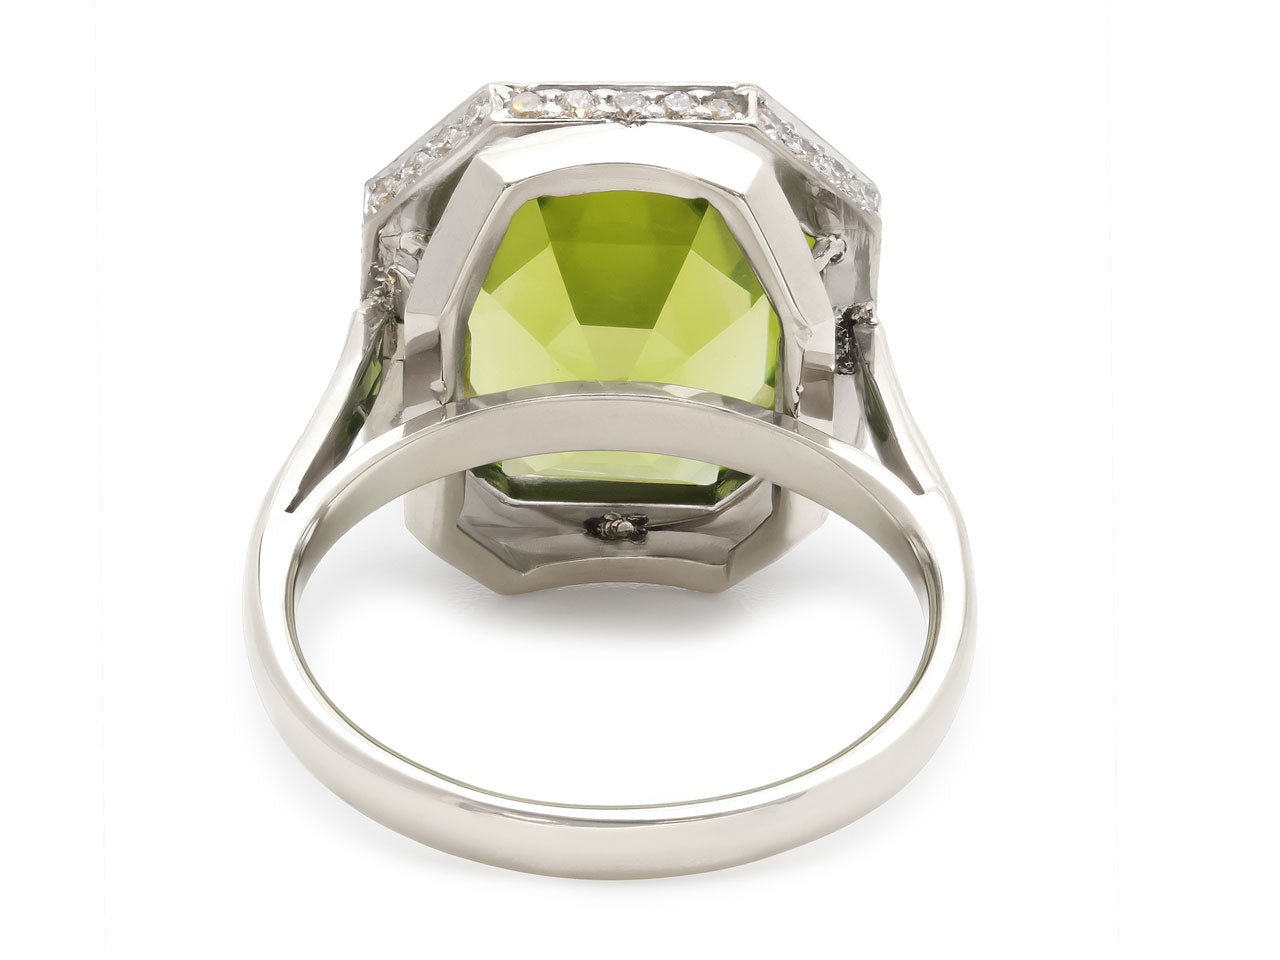 Beladora 'Bespoke' Peridot and Diamond Ring in 18K White Gold